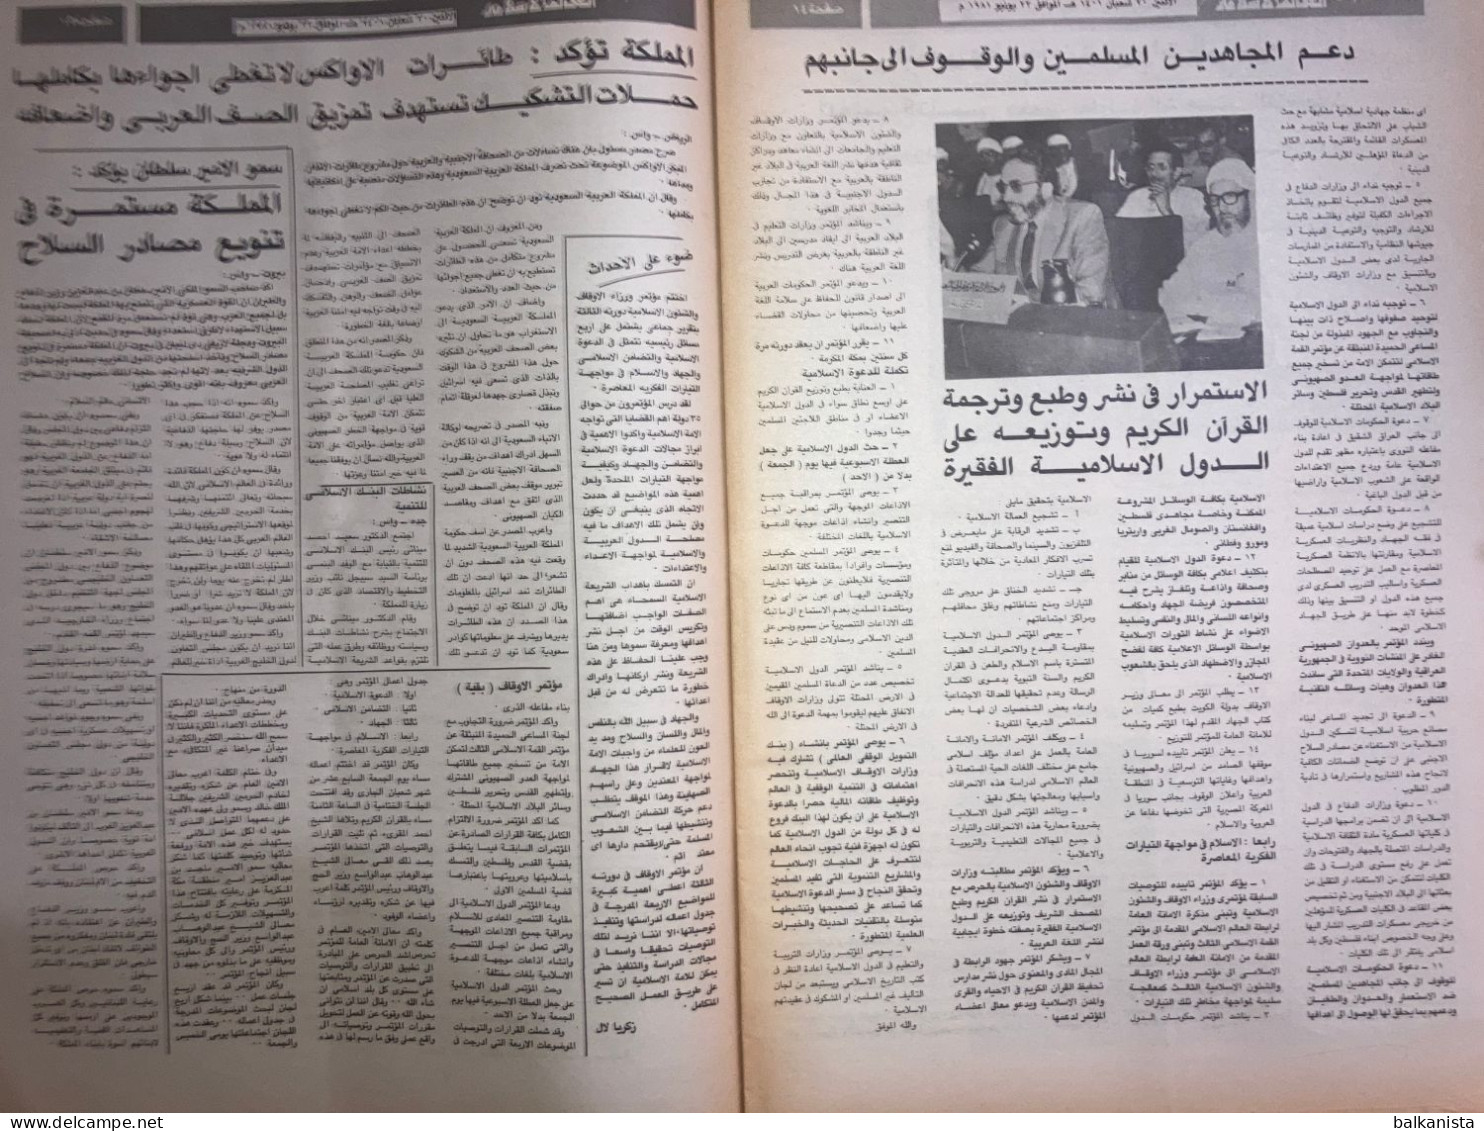 Saudi Arabia Akhbar al-Alam al-Islami Newspaper 22 January 1981